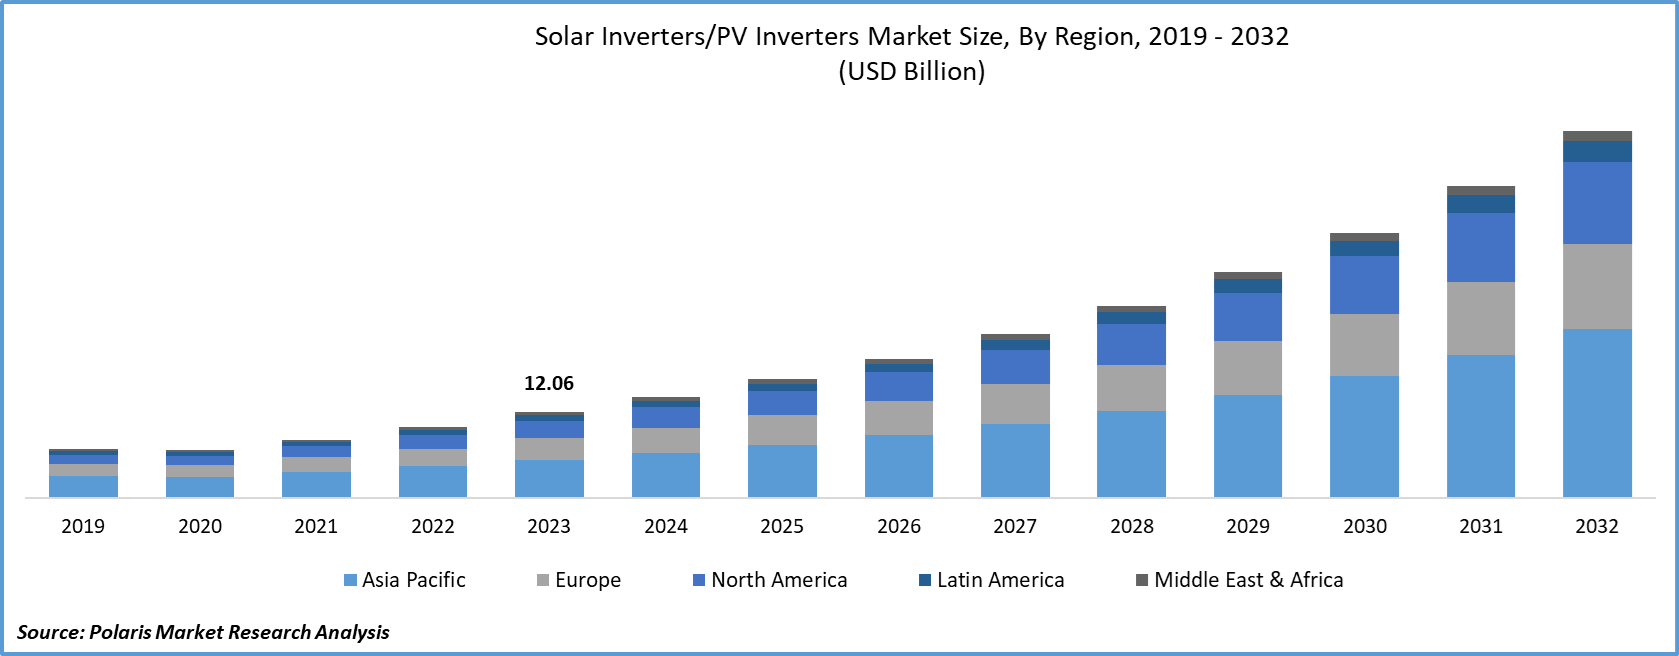 Solar Inverters or PV Inverters Market Size